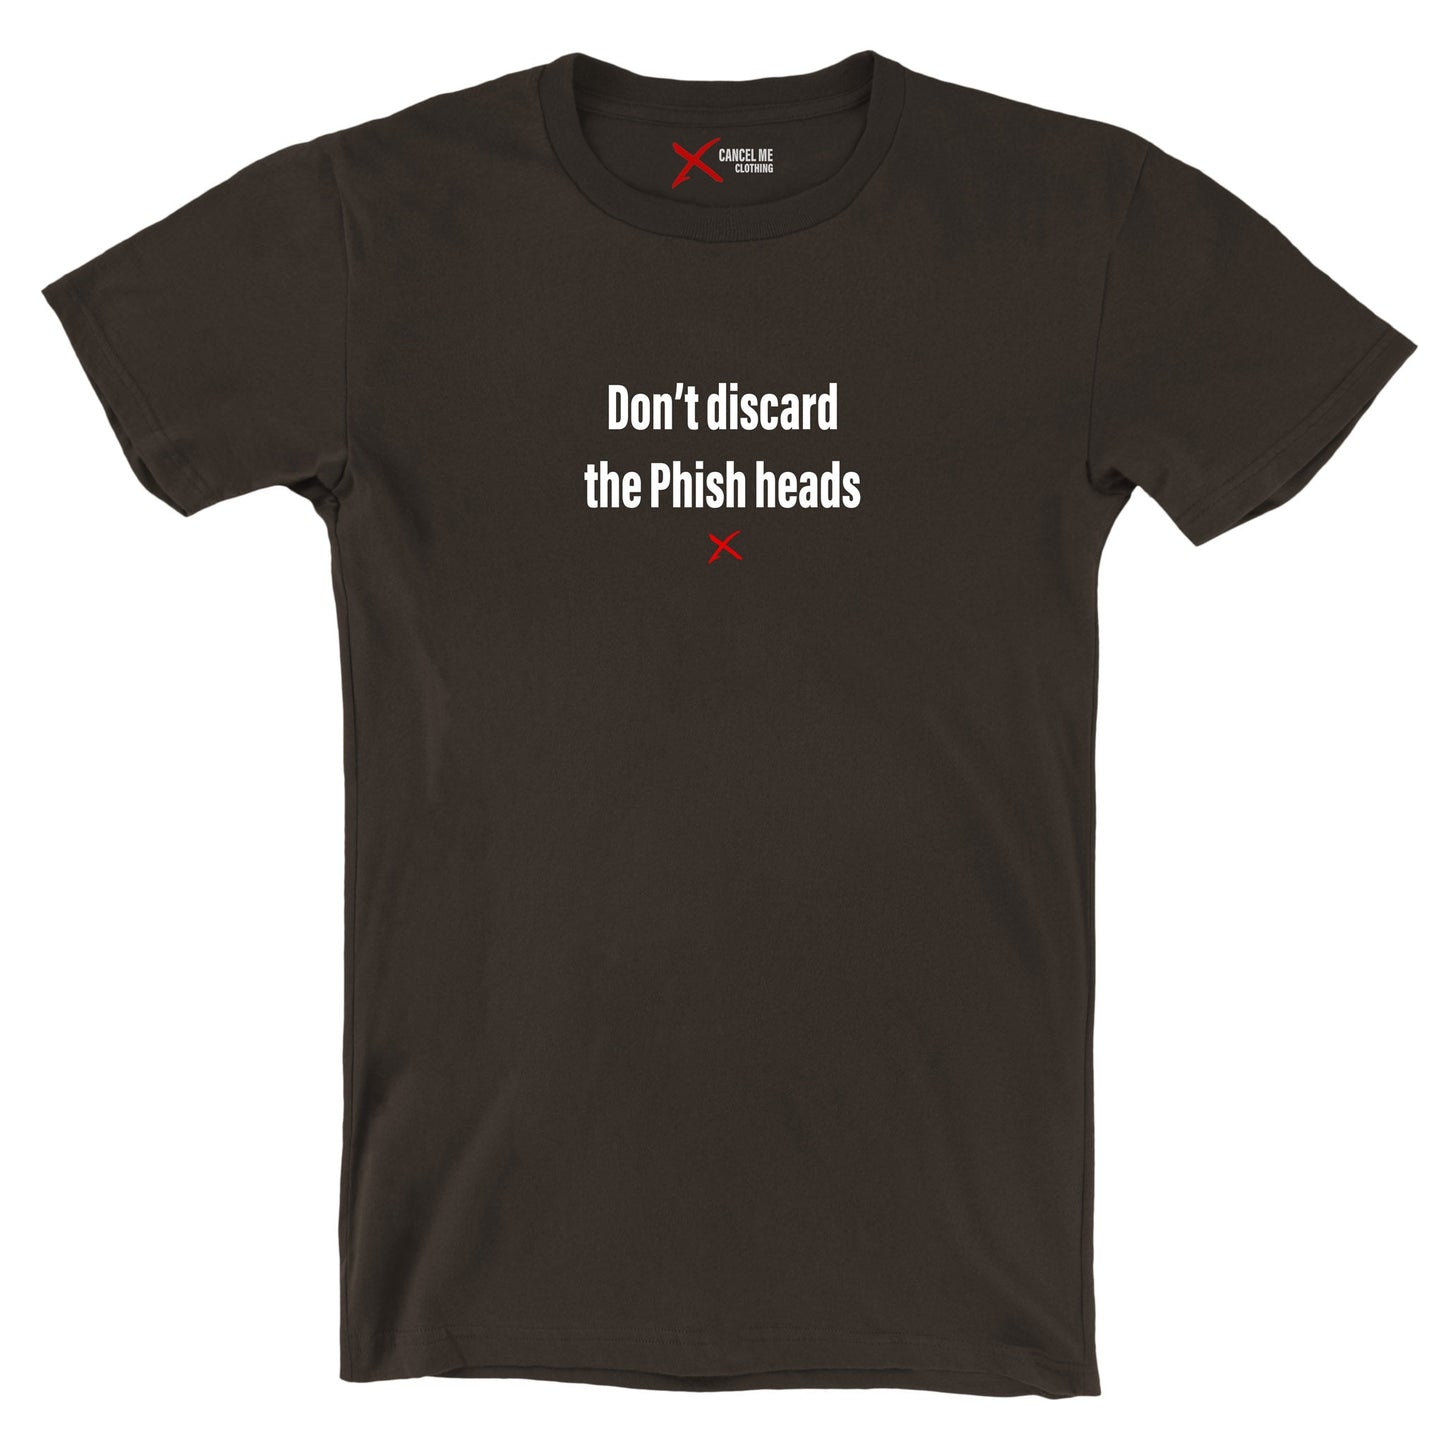 Don't discard the Phish heads - Shirt